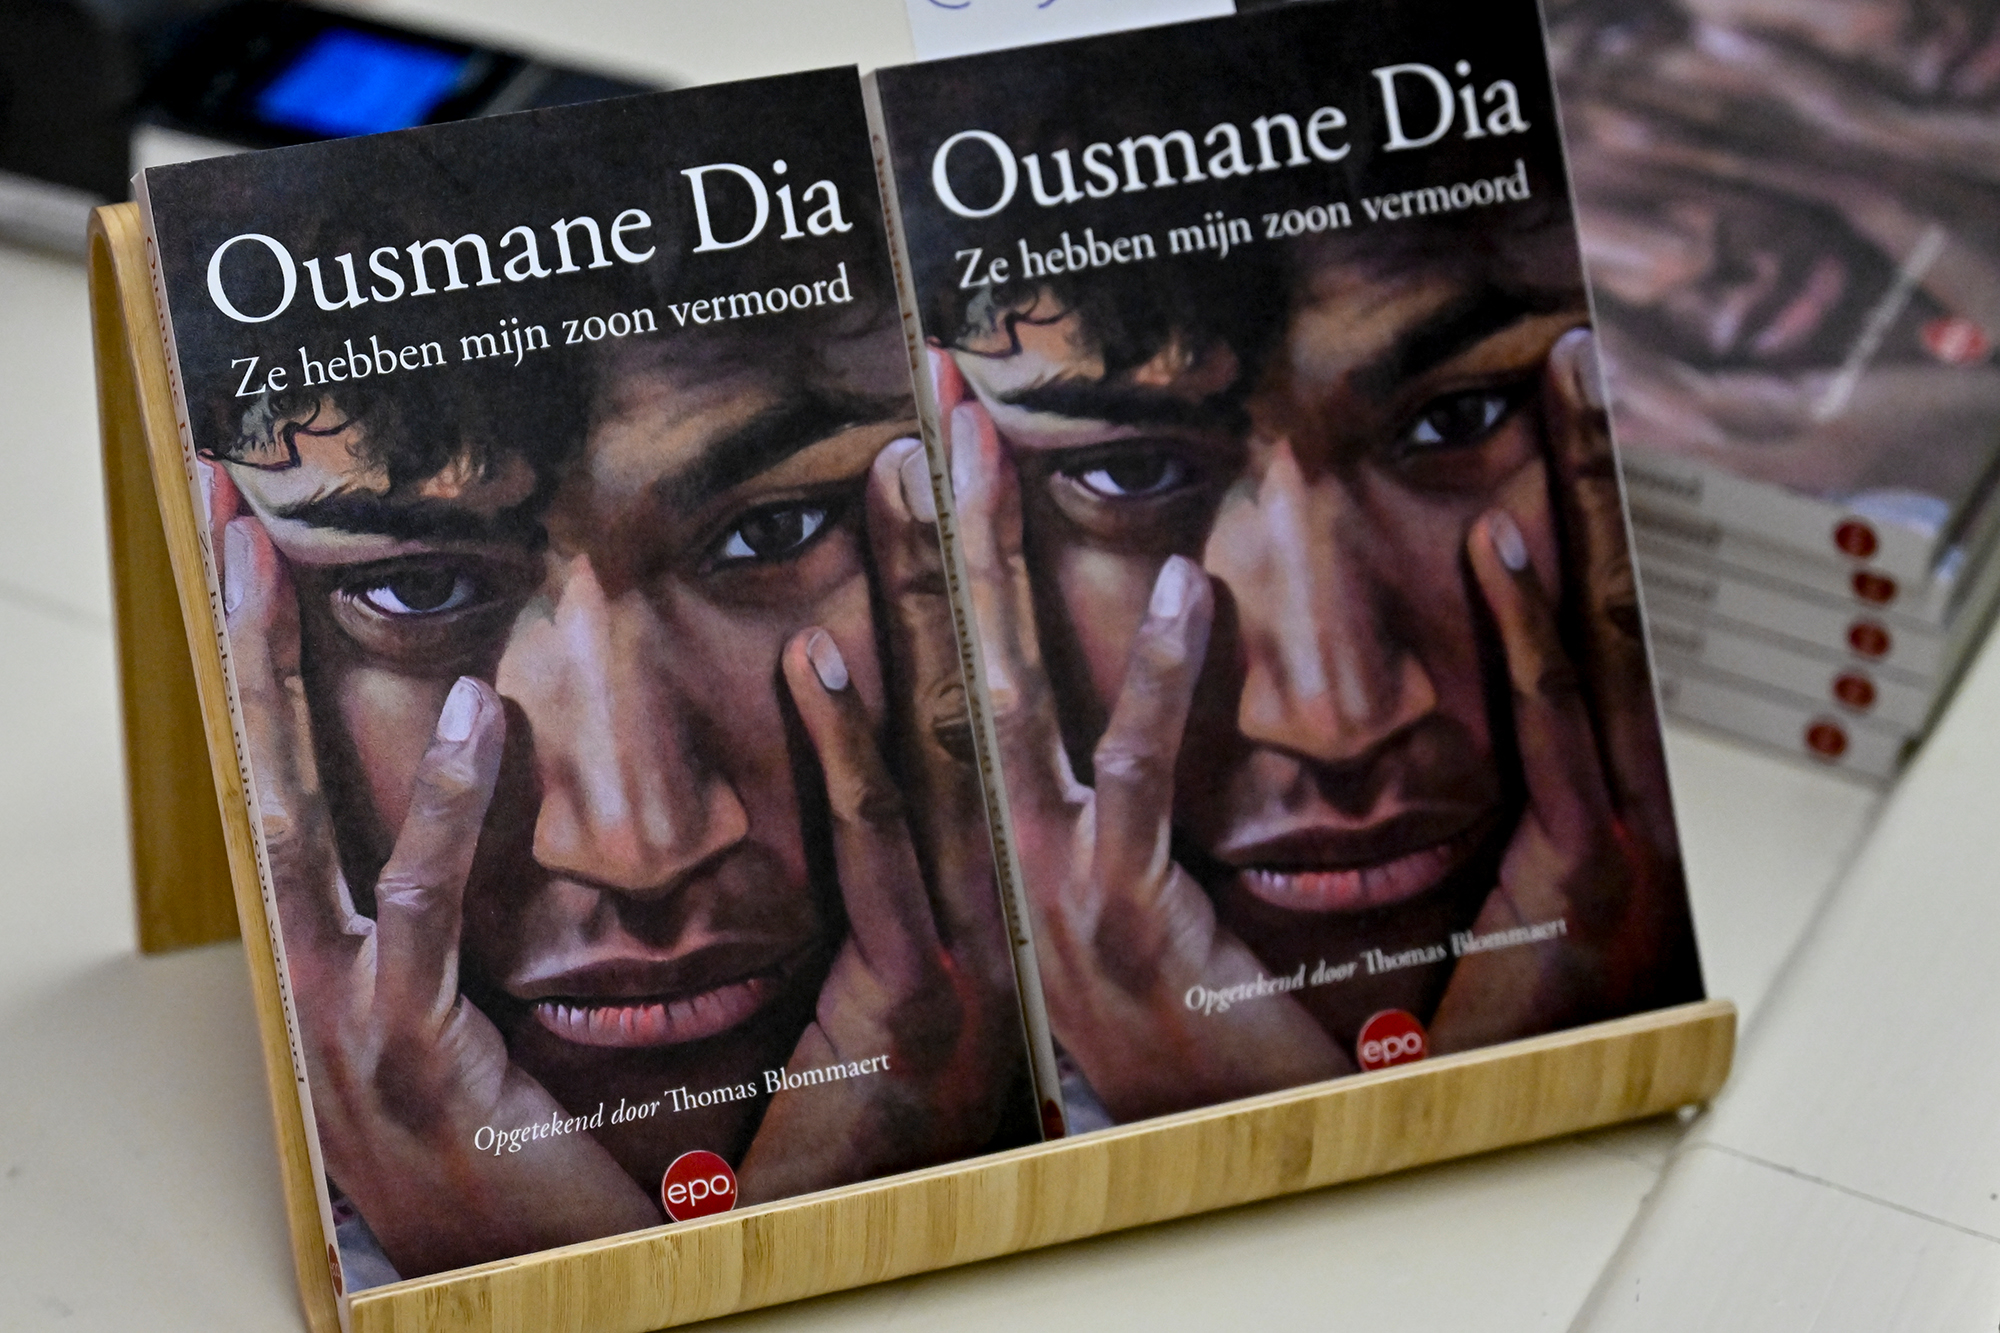 'Ze hebben mijn zoon vermoord' von Ousmane Dia (Bild: Dirk Waem/Belga)